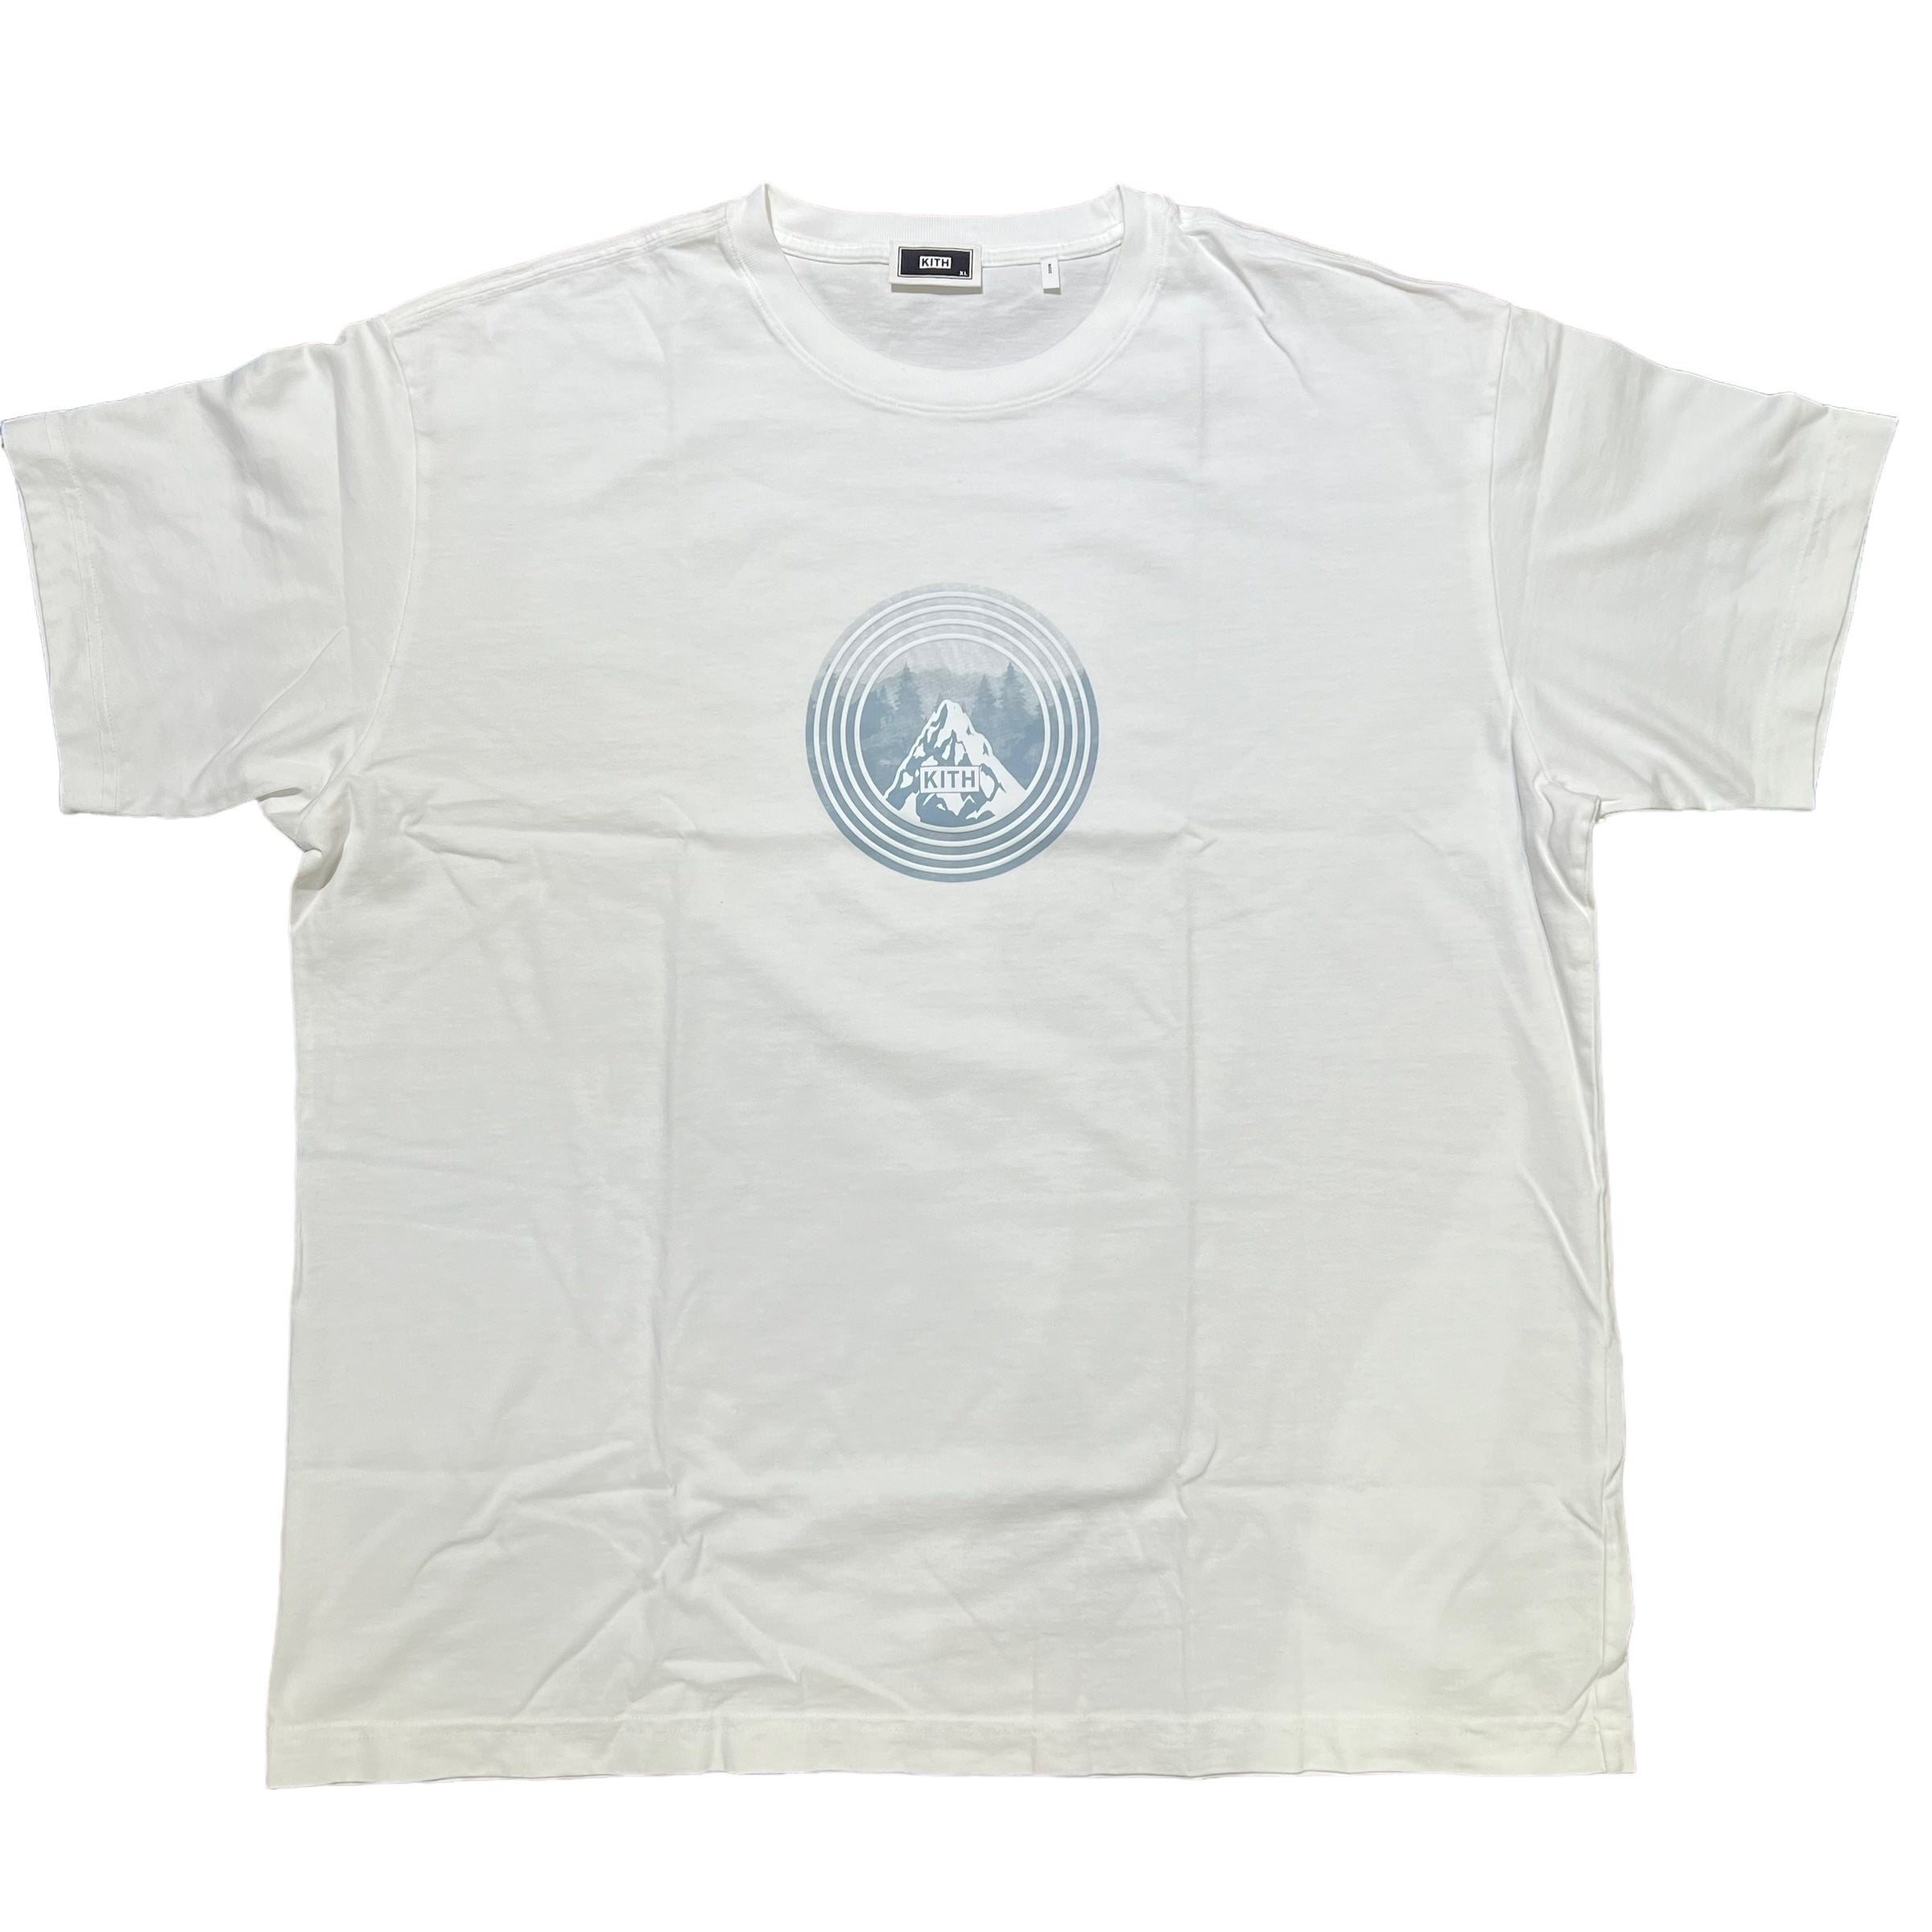 Kith Mountain Rings T-Shirt